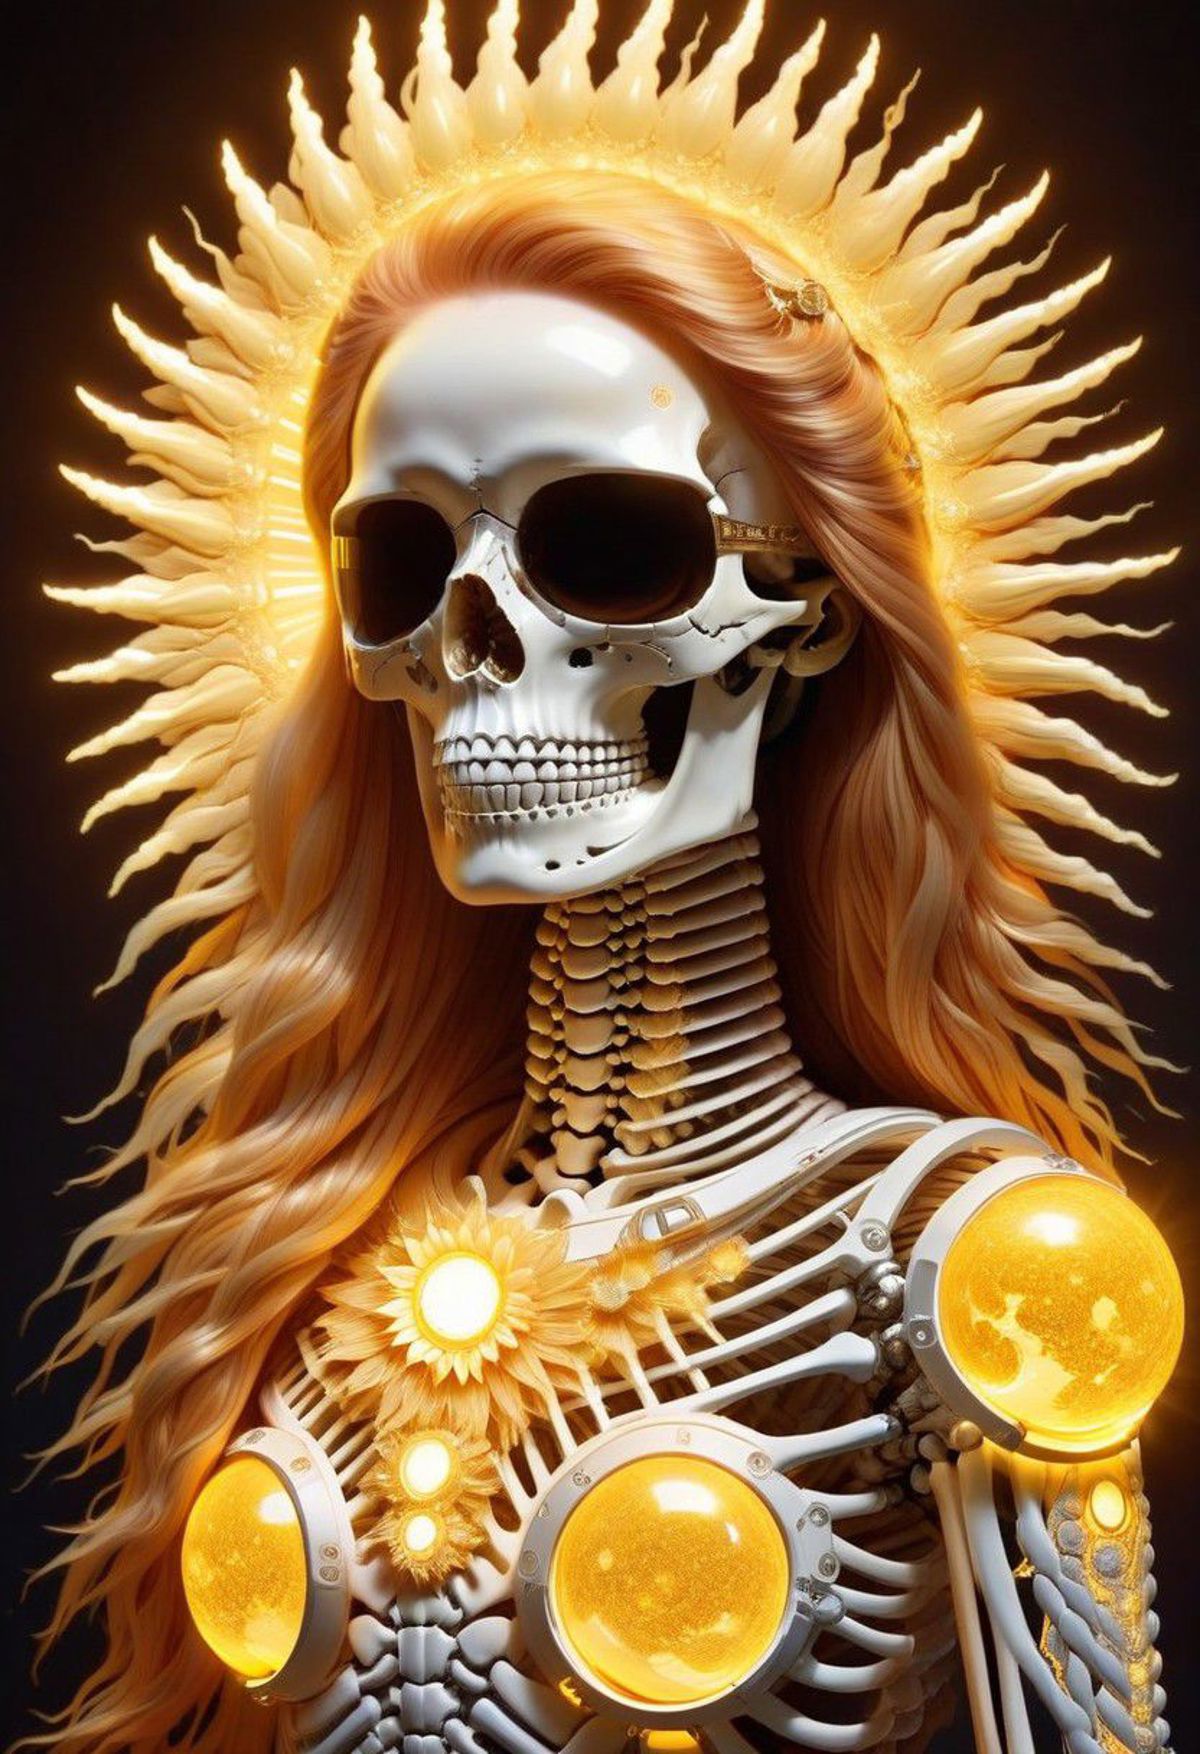 SkeletoNaut image by Thunkdeep